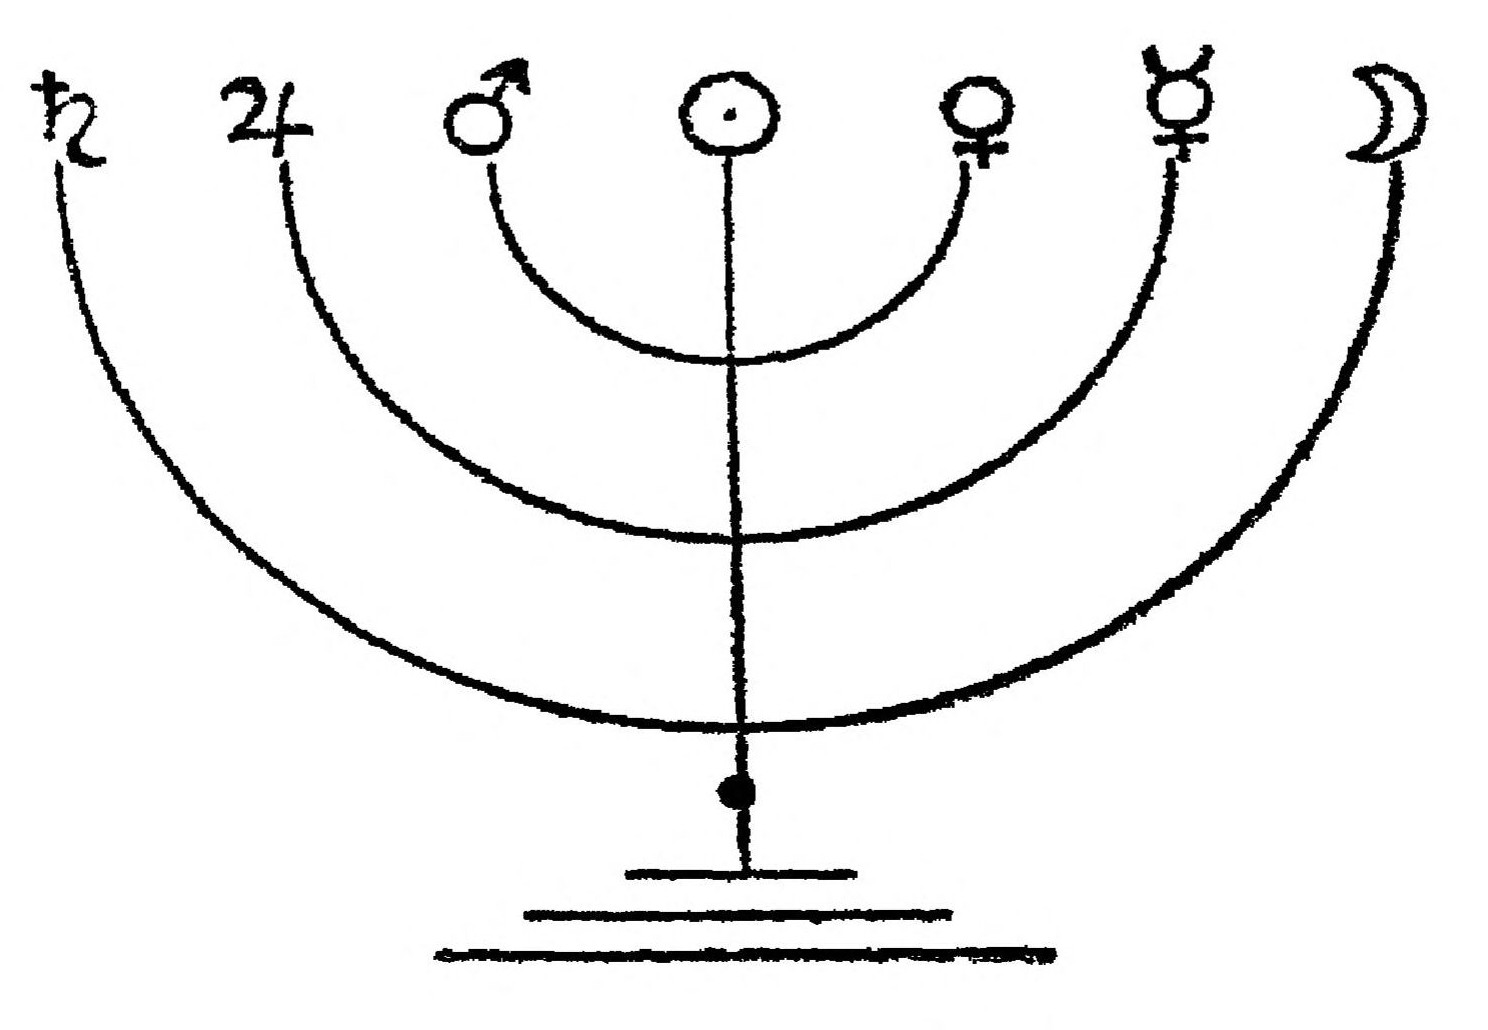 Figure 15.